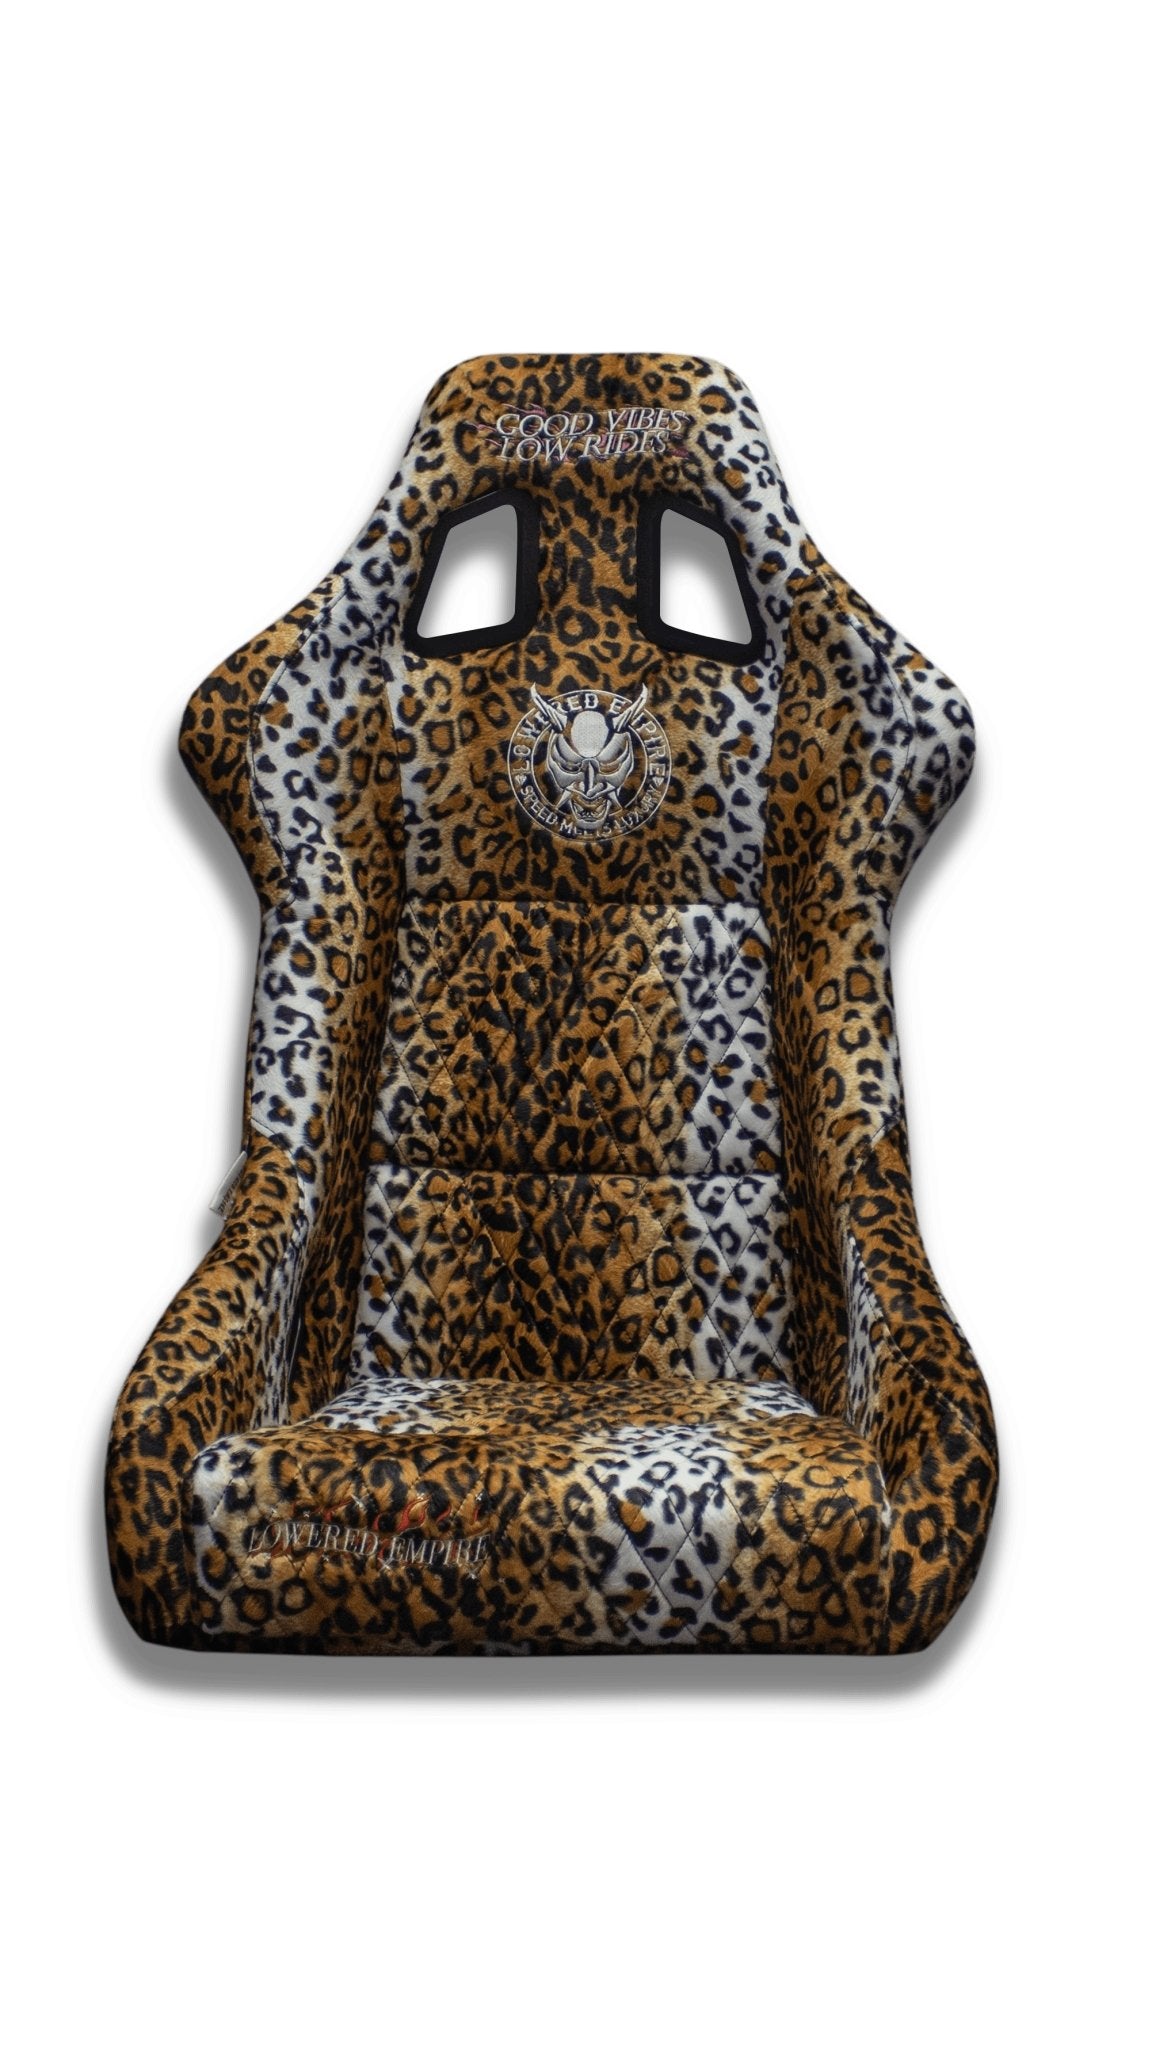 Cheetah Print Lowered Empire Bucket Seats Single - Loweredempire